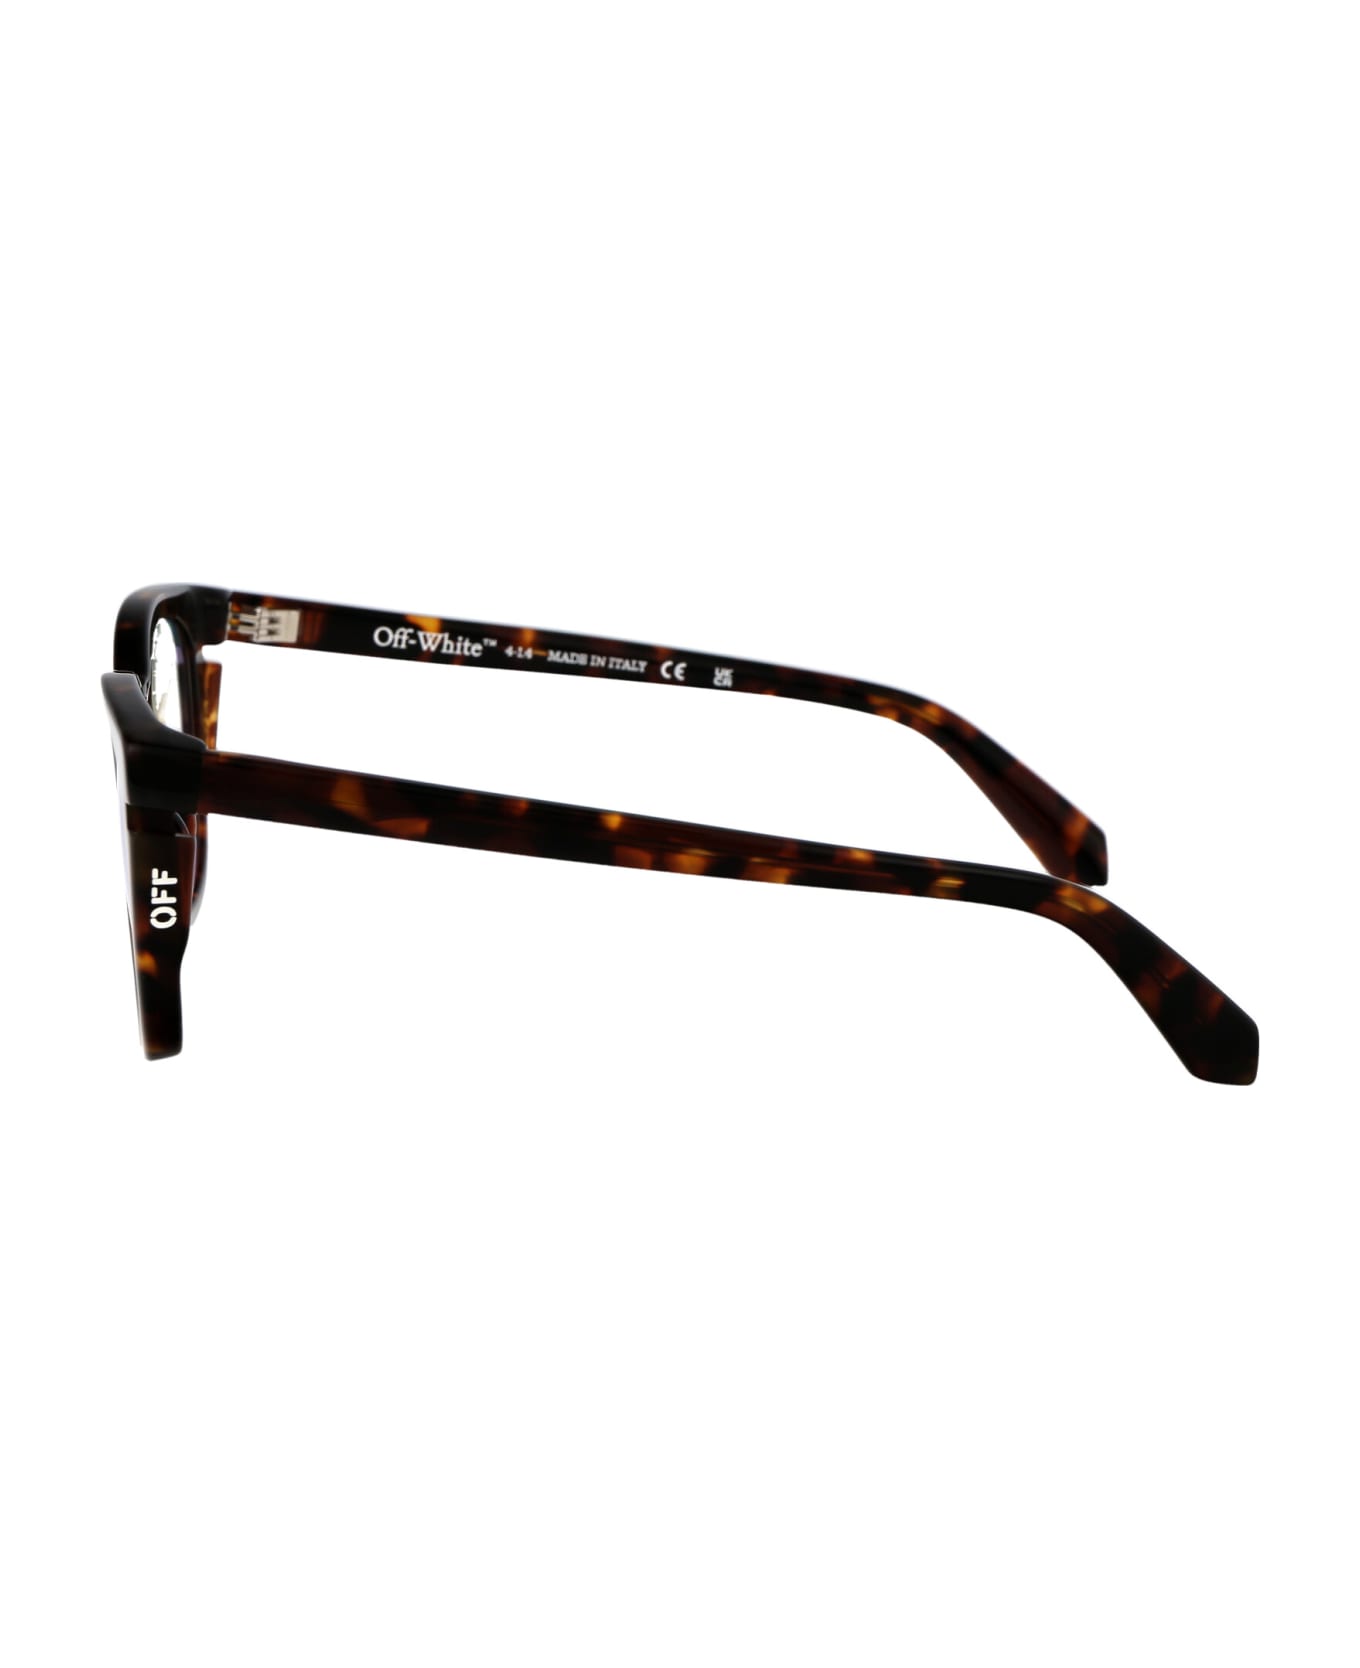 Off-White Optical Style 51 Glasses - 6000 HAVANA